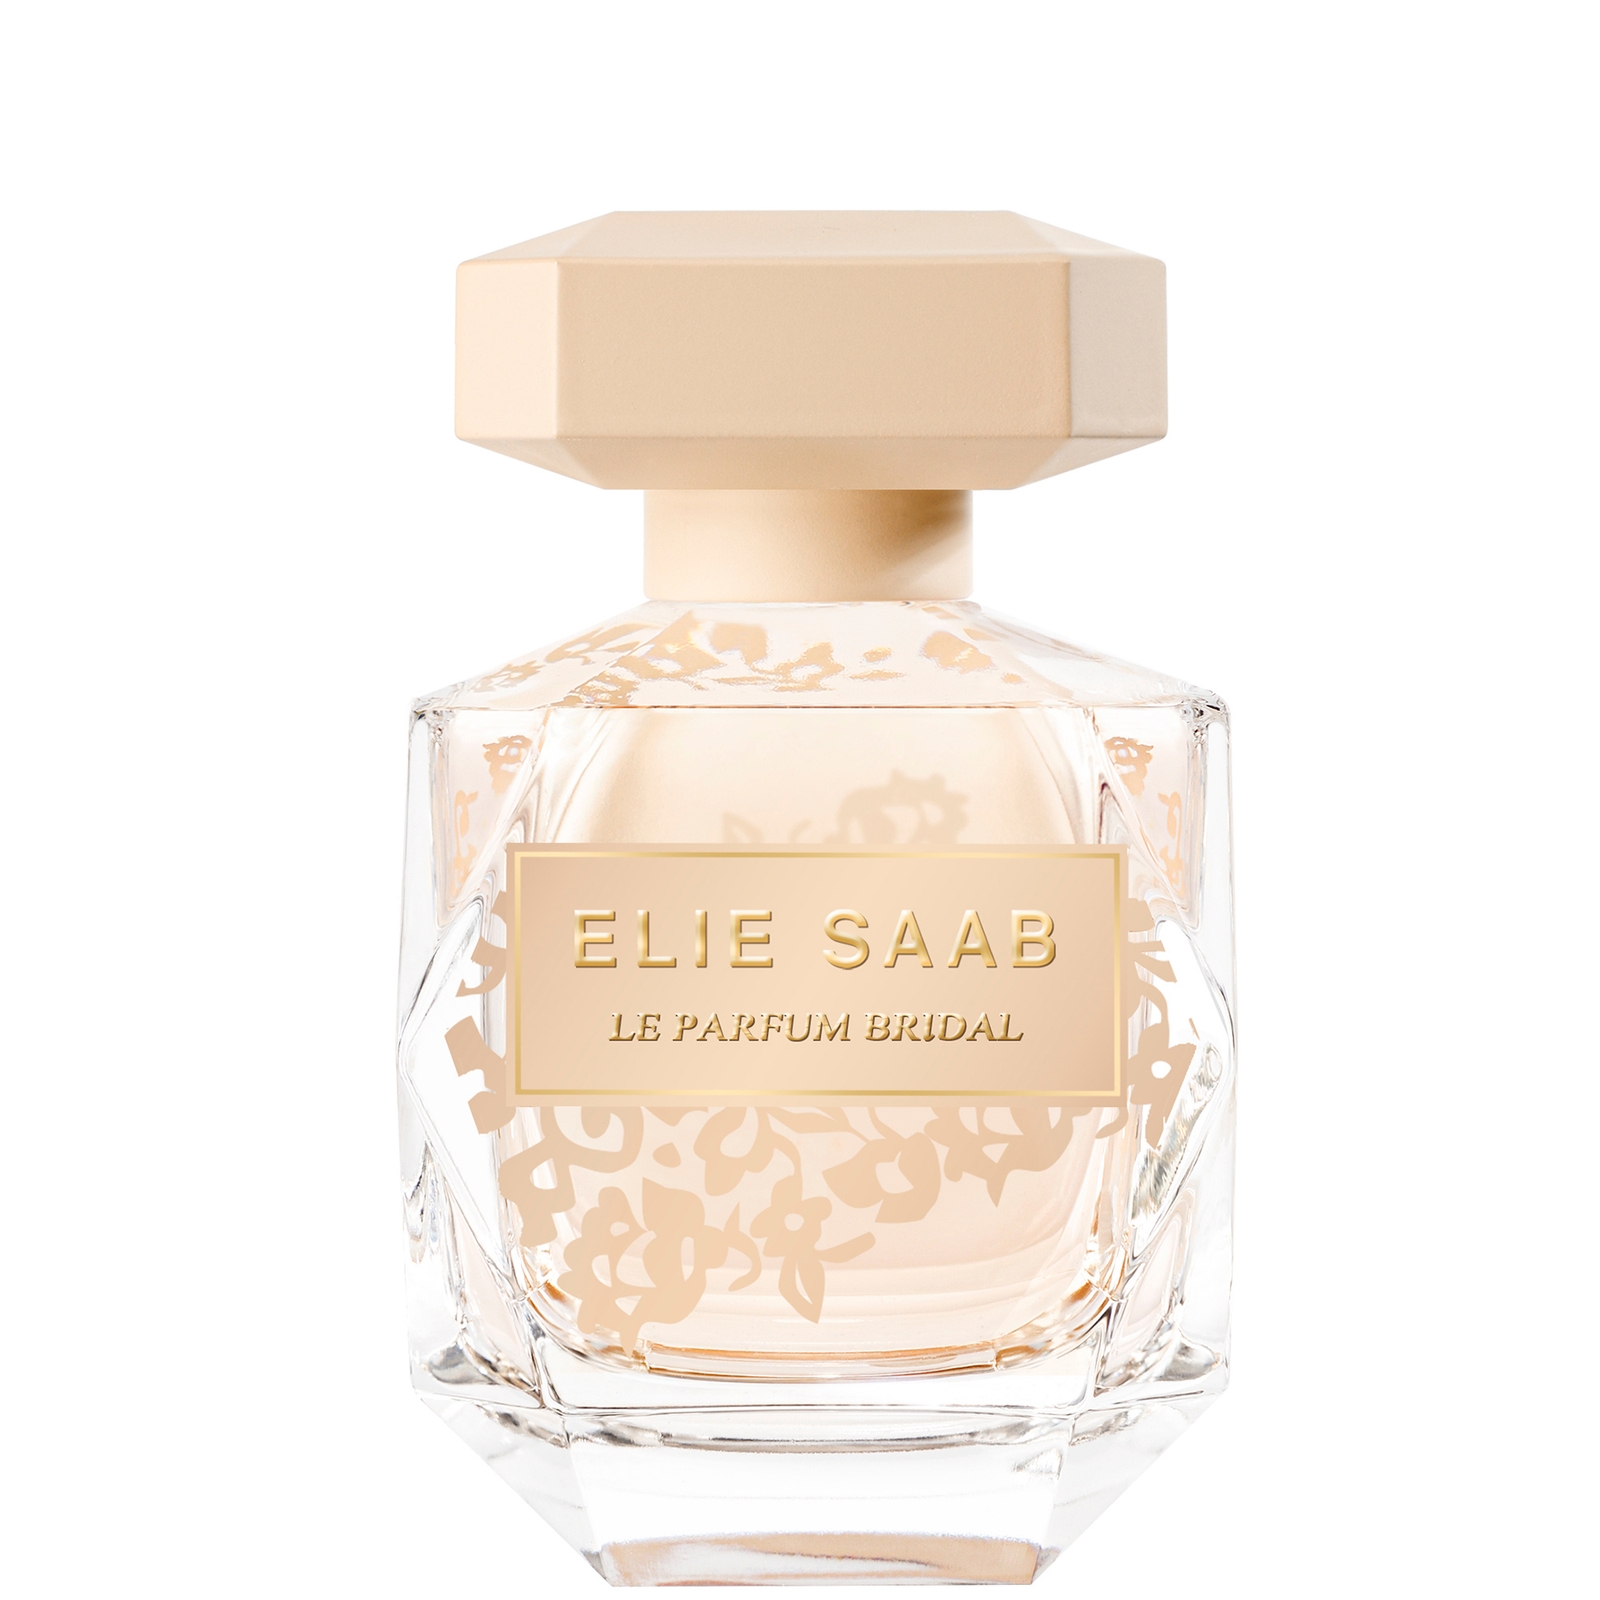 Image of Elie Saab Le Parfum Bridal Eau de Parfum Profumo Spray 90ml